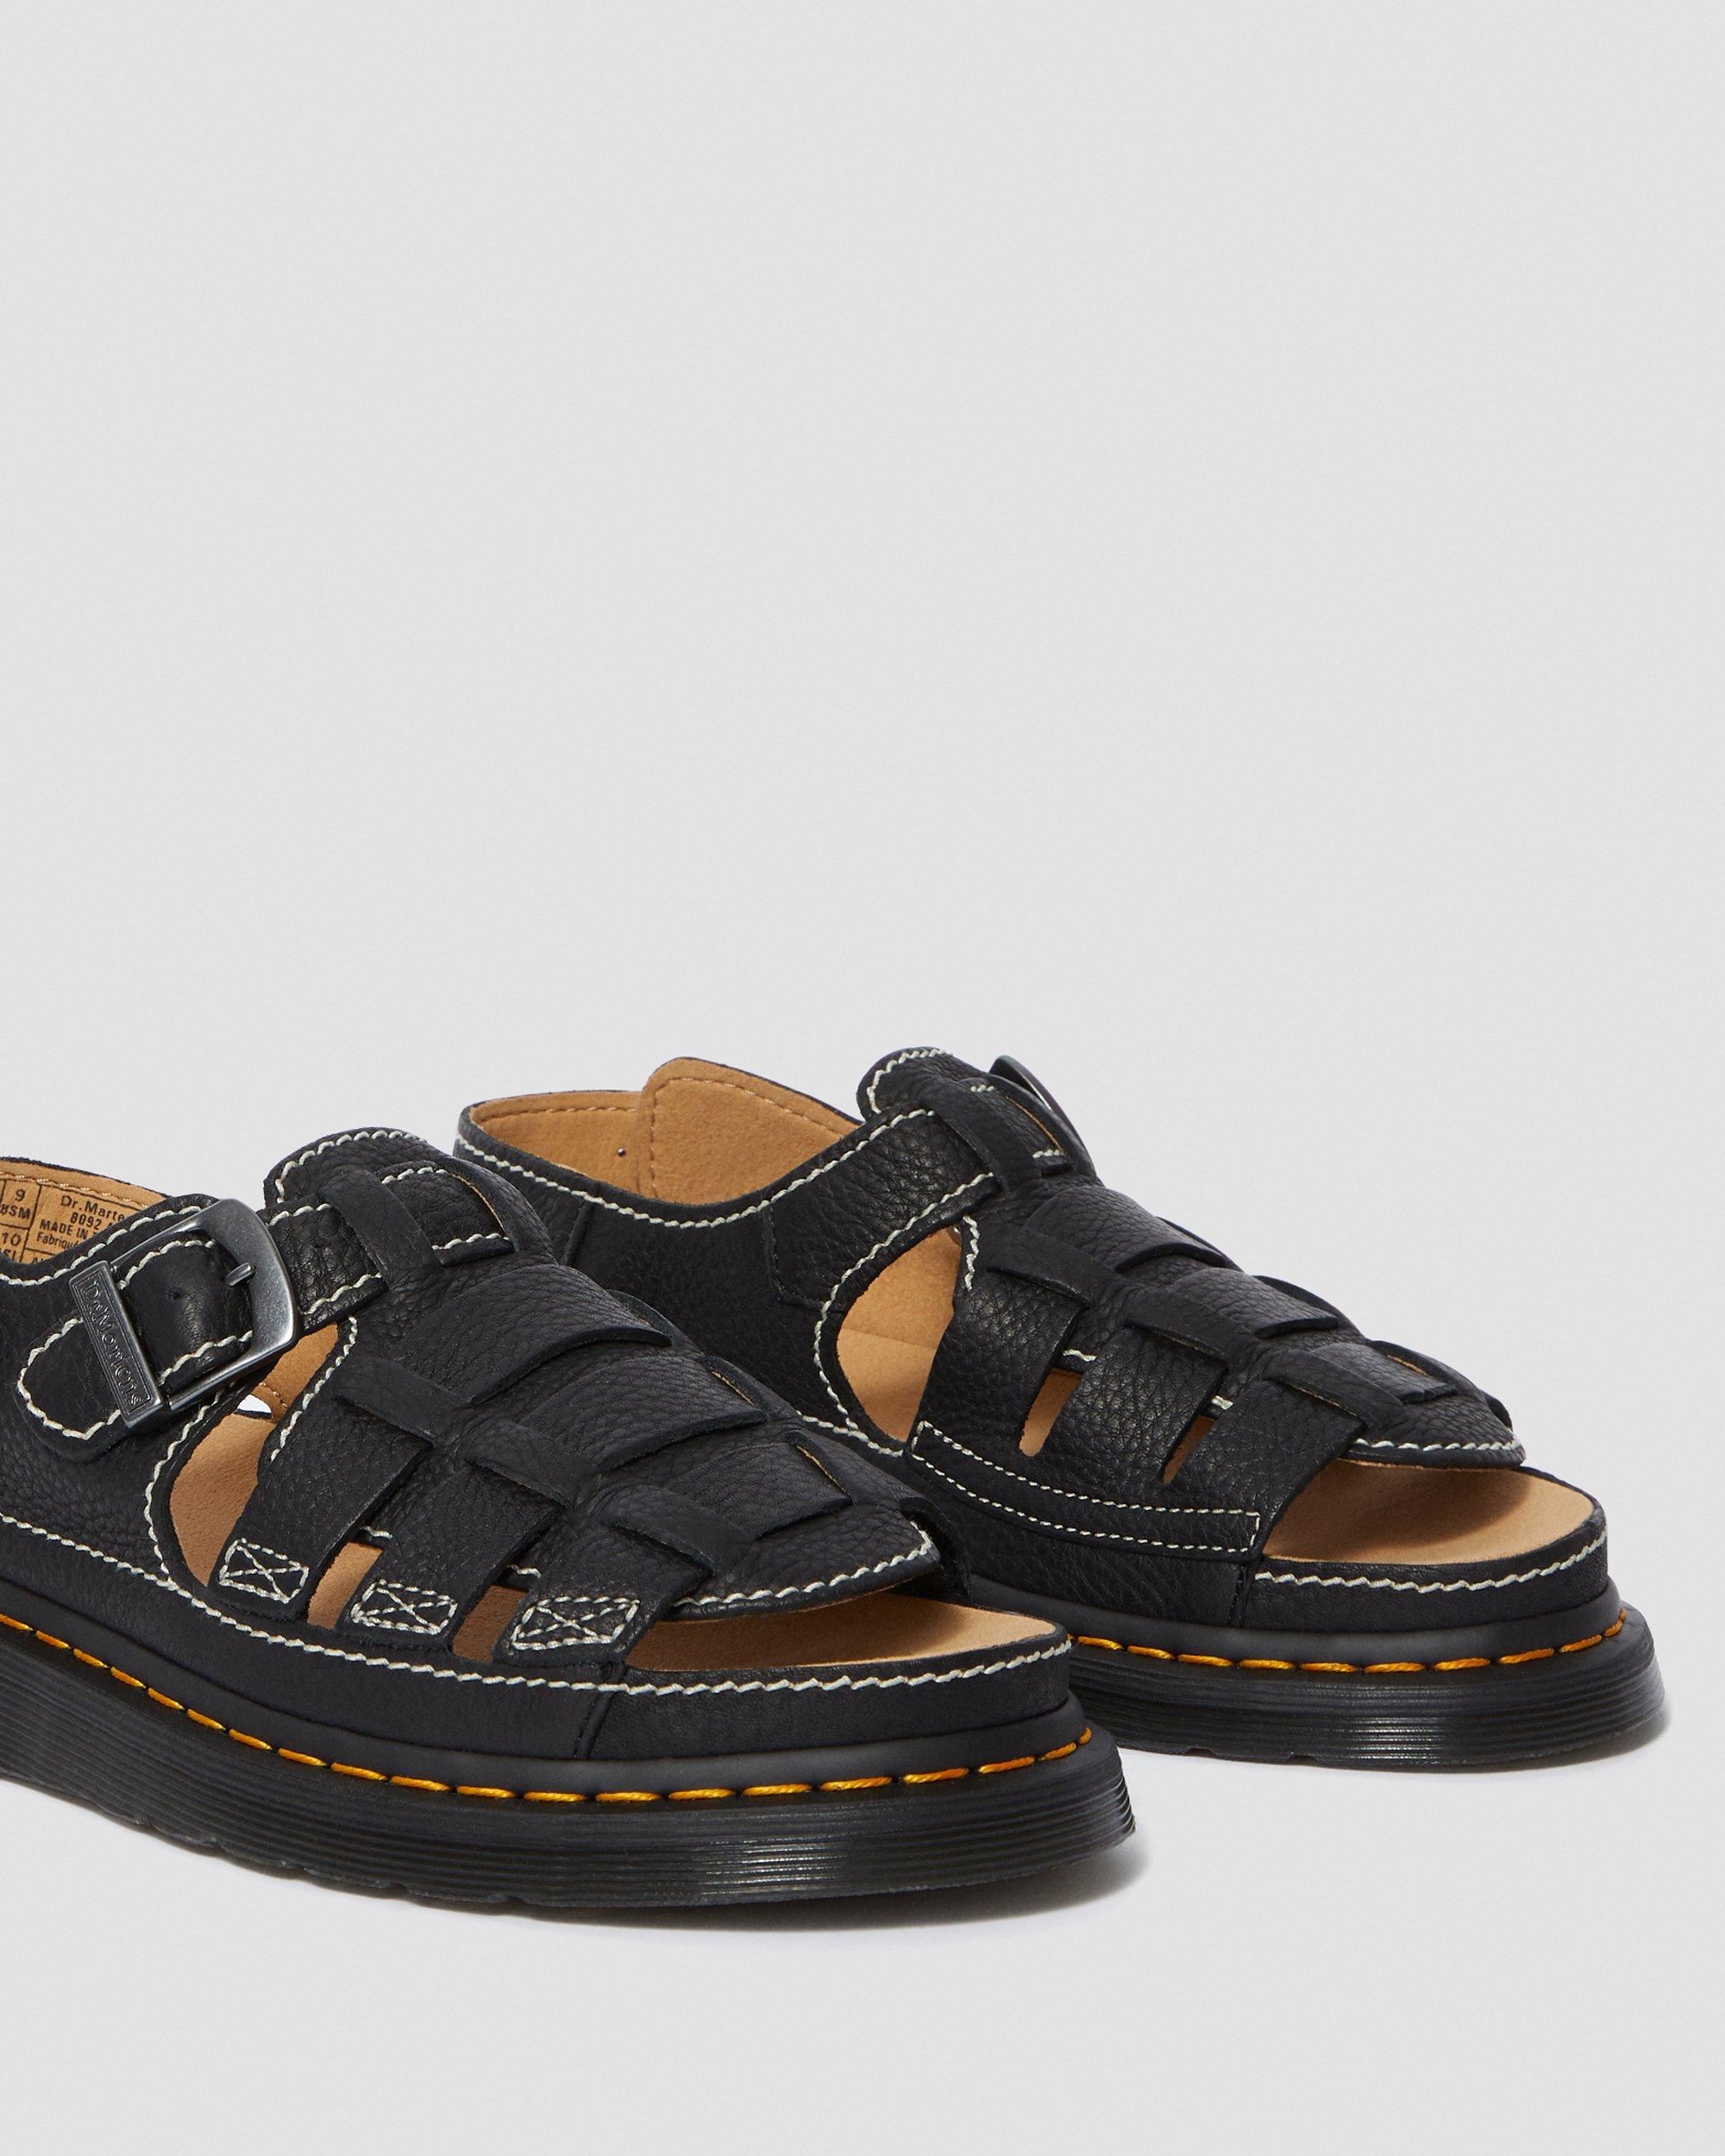 Buy > dr martens mono fisherman sandals > in stock